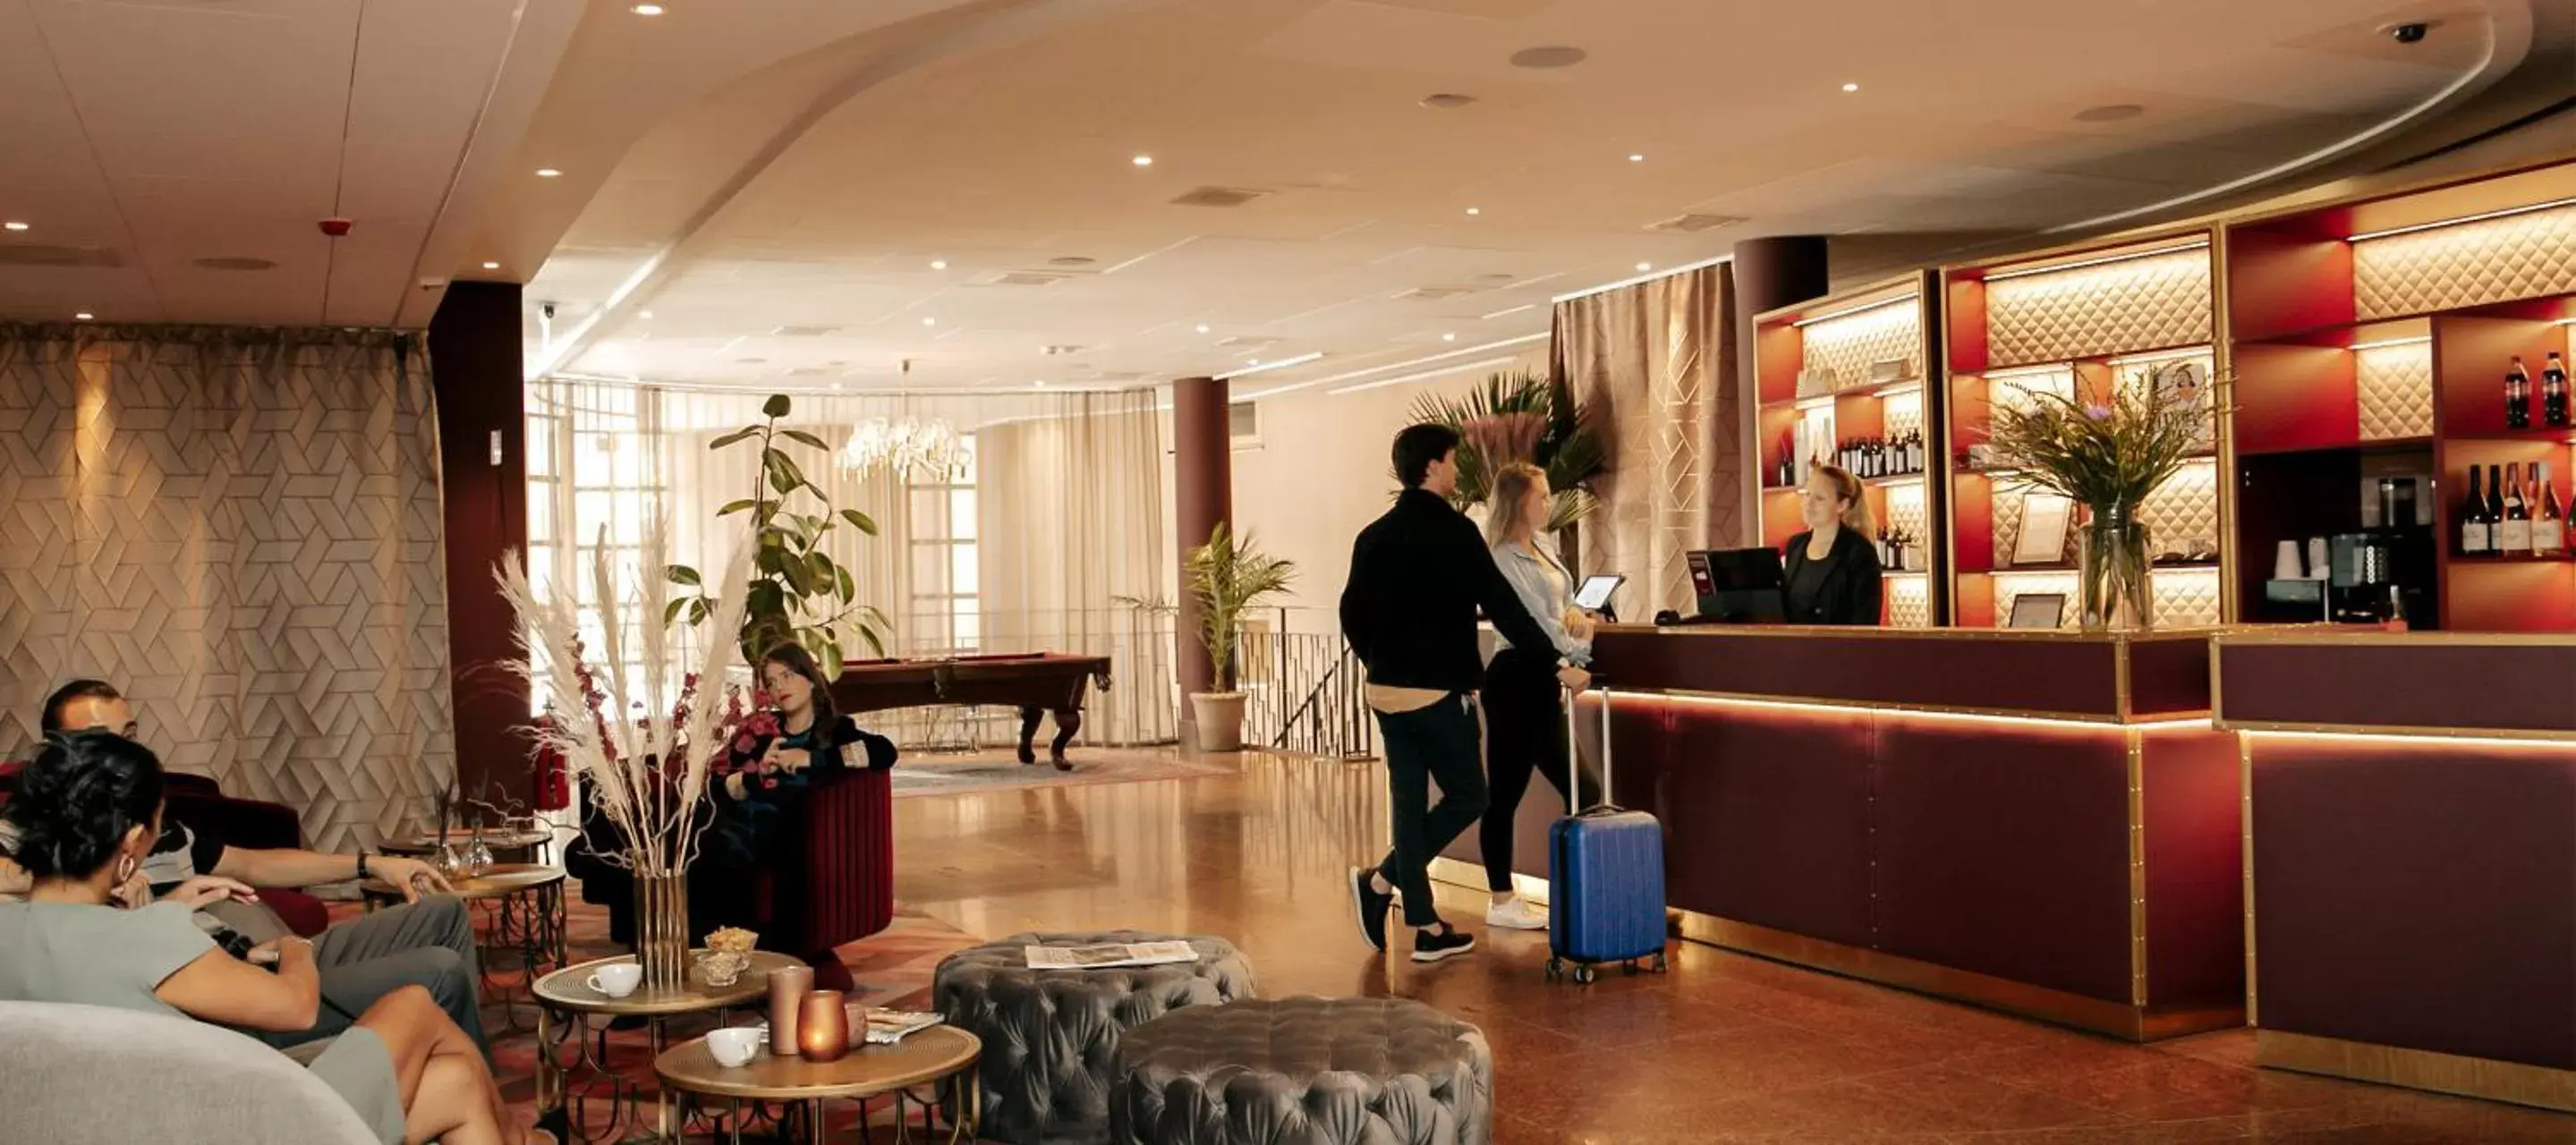 Lobby or reception in Hotel Hasselbacken